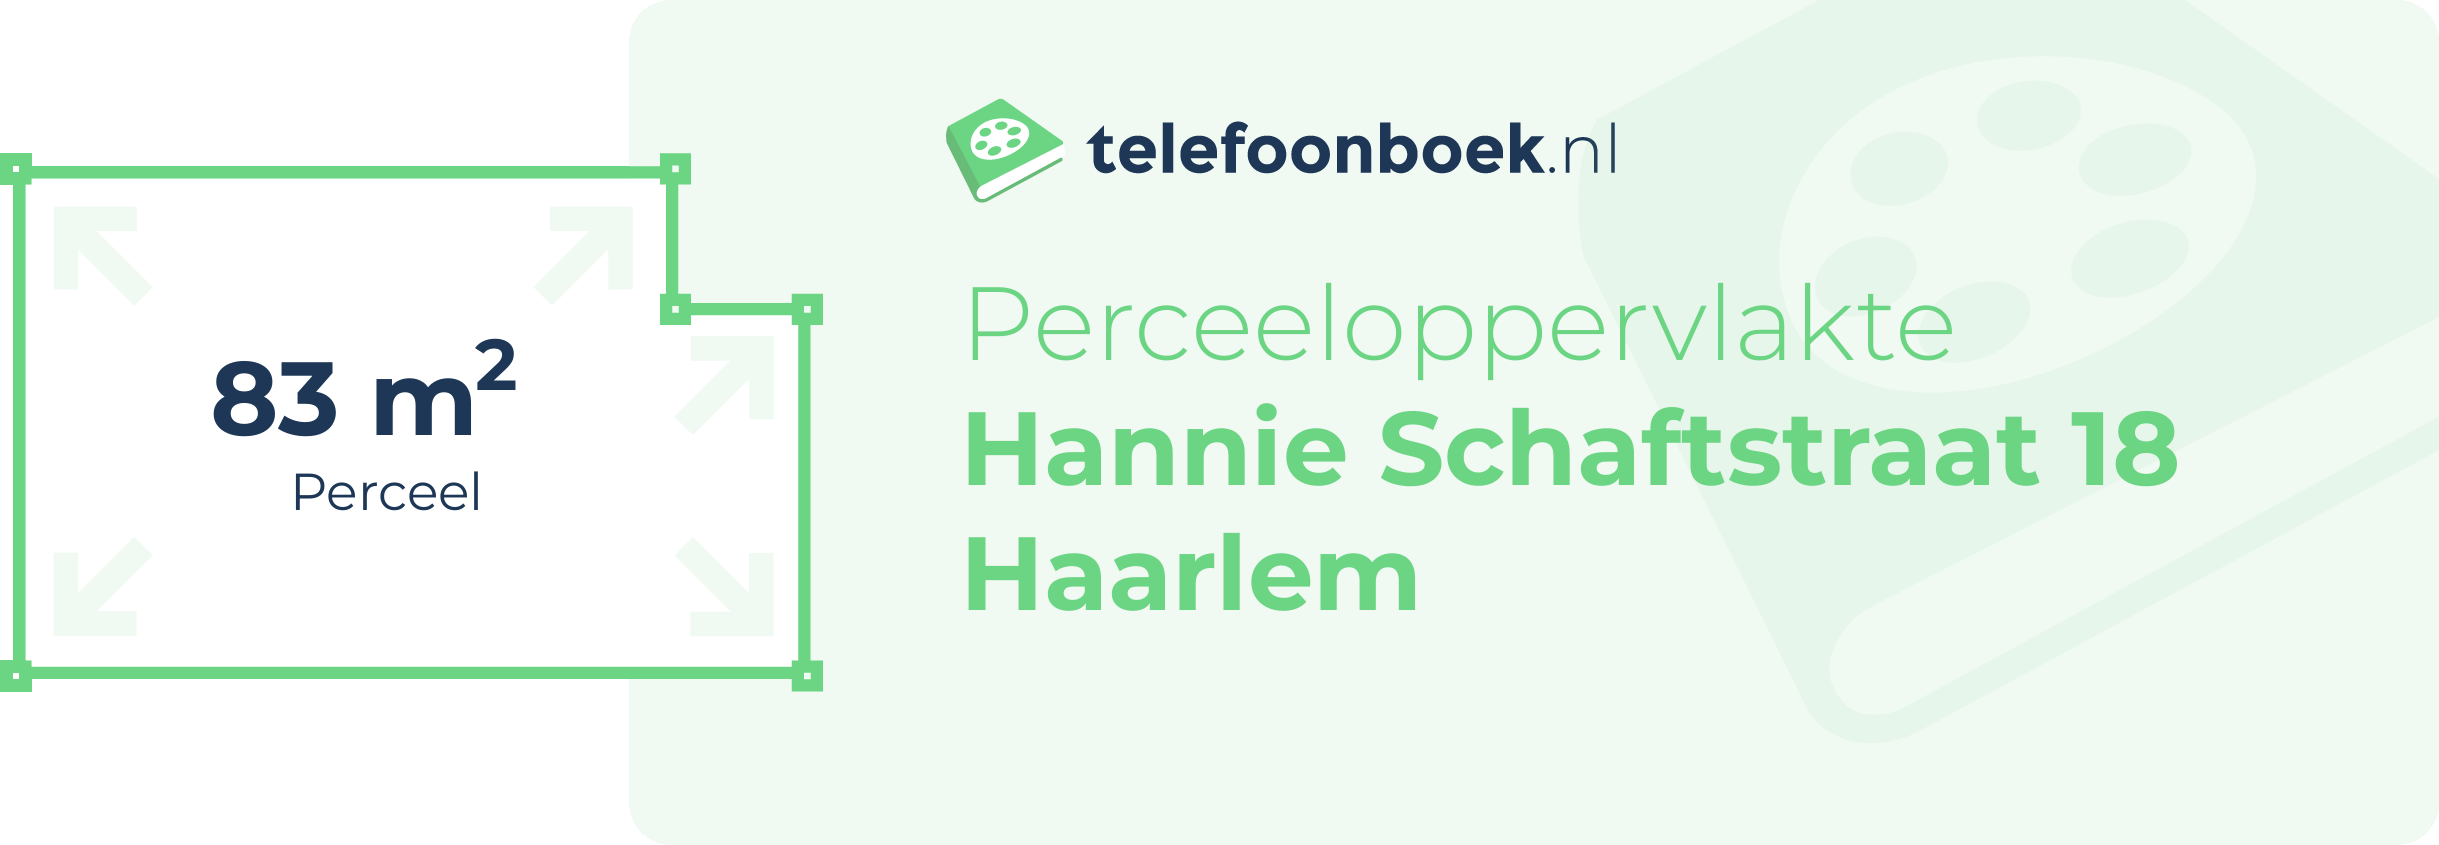 Perceeloppervlakte Hannie Schaftstraat 18 Haarlem